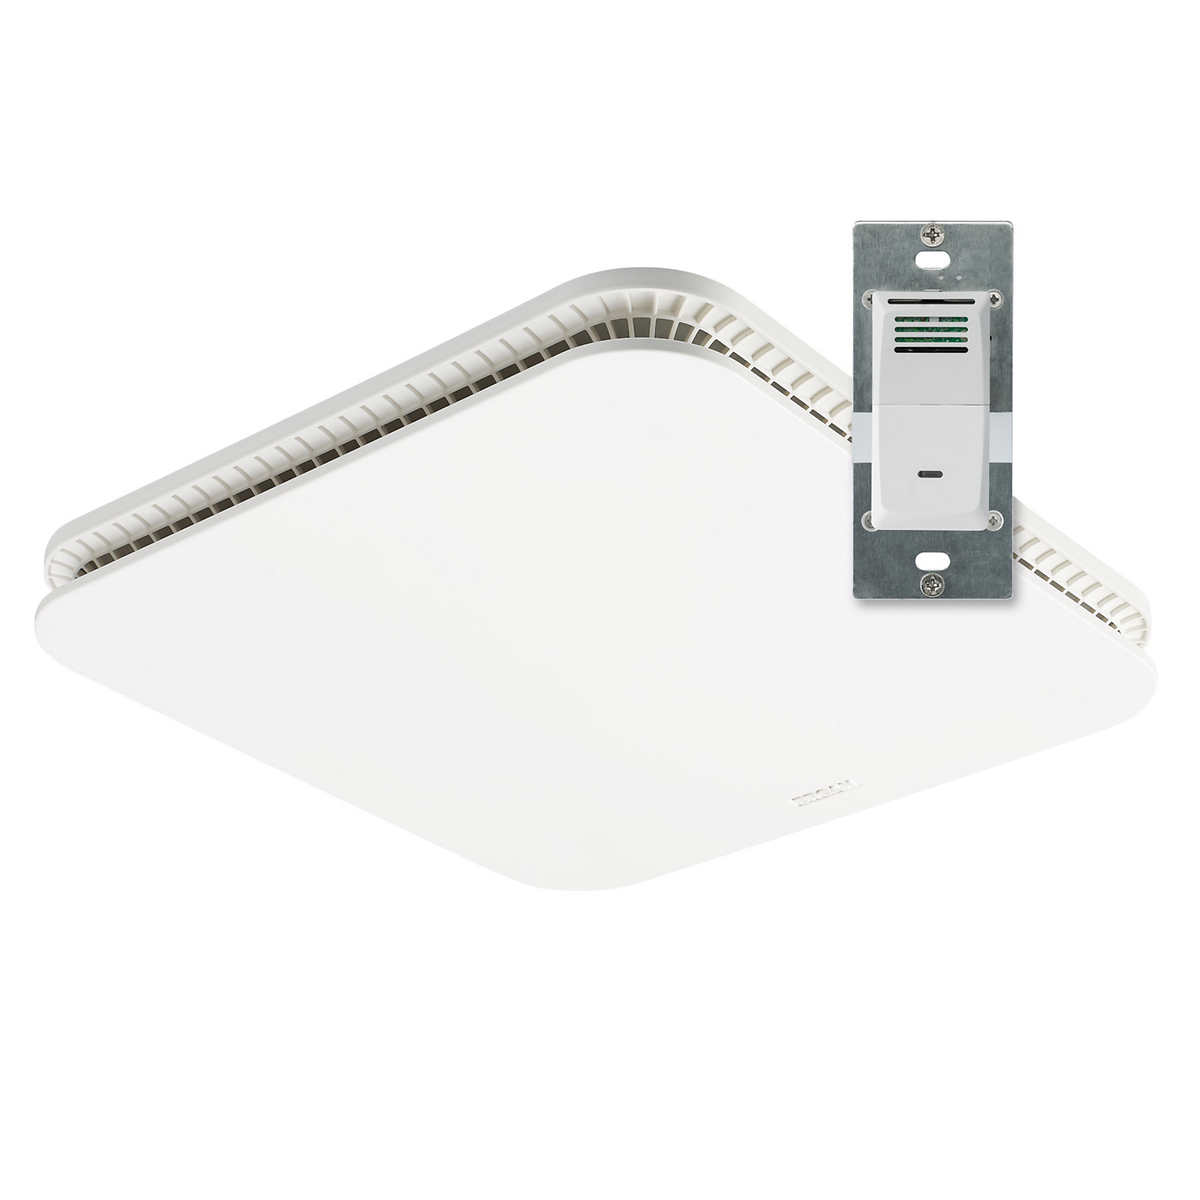 Broan Bath Fan Grille Upgrade And, Costco Bathroom Fan With Light